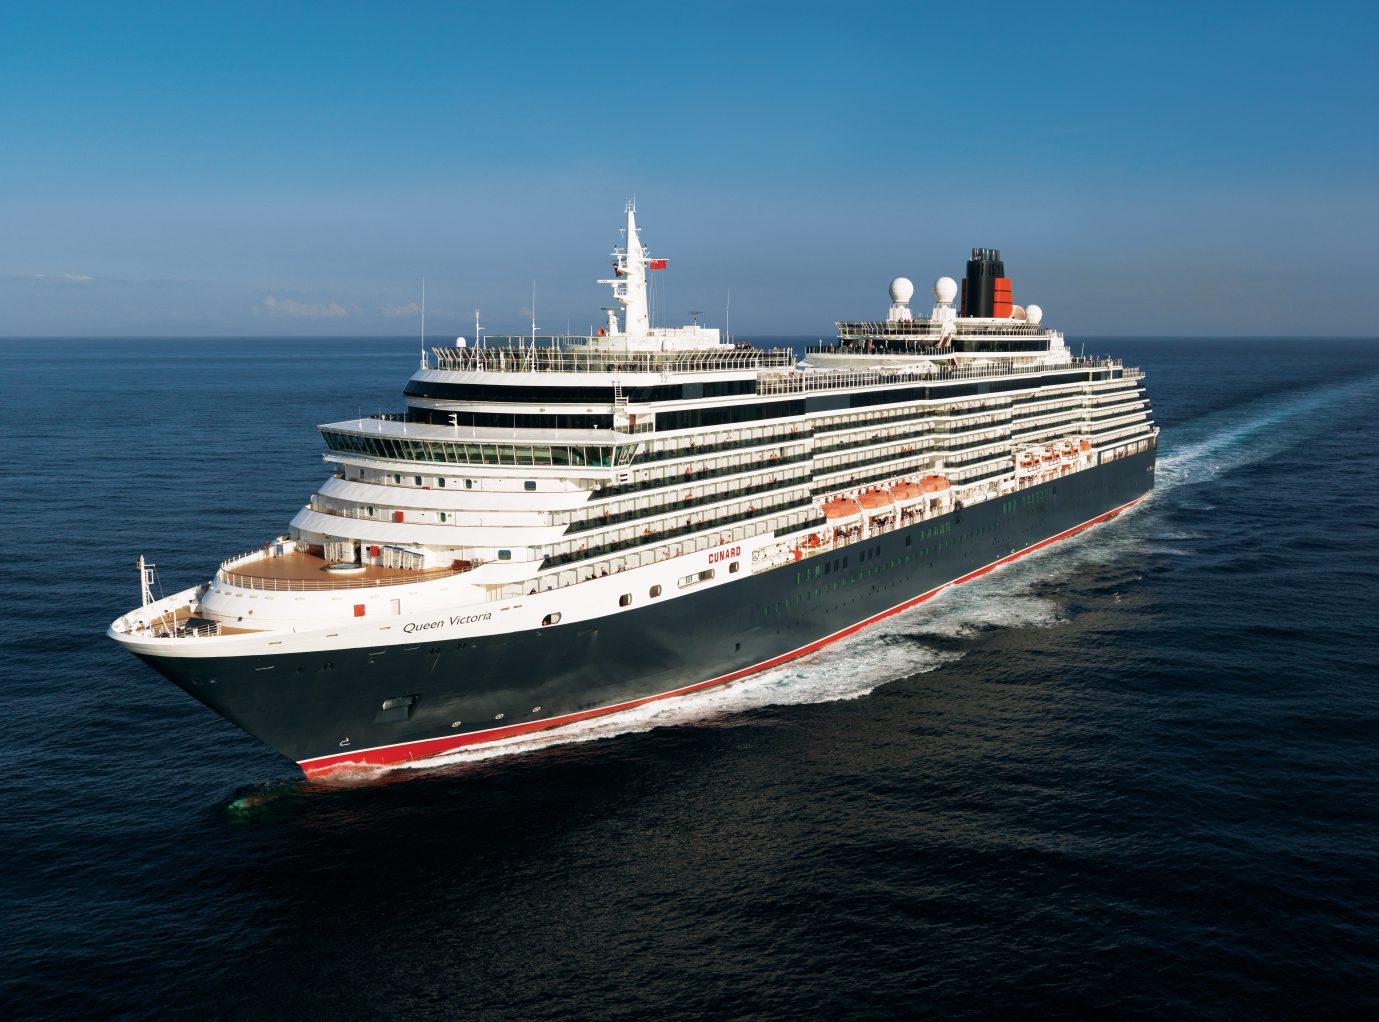 Go on a wonderful 30-night Cunard cruise, rail and safari adventure in Africa from $333pp per night